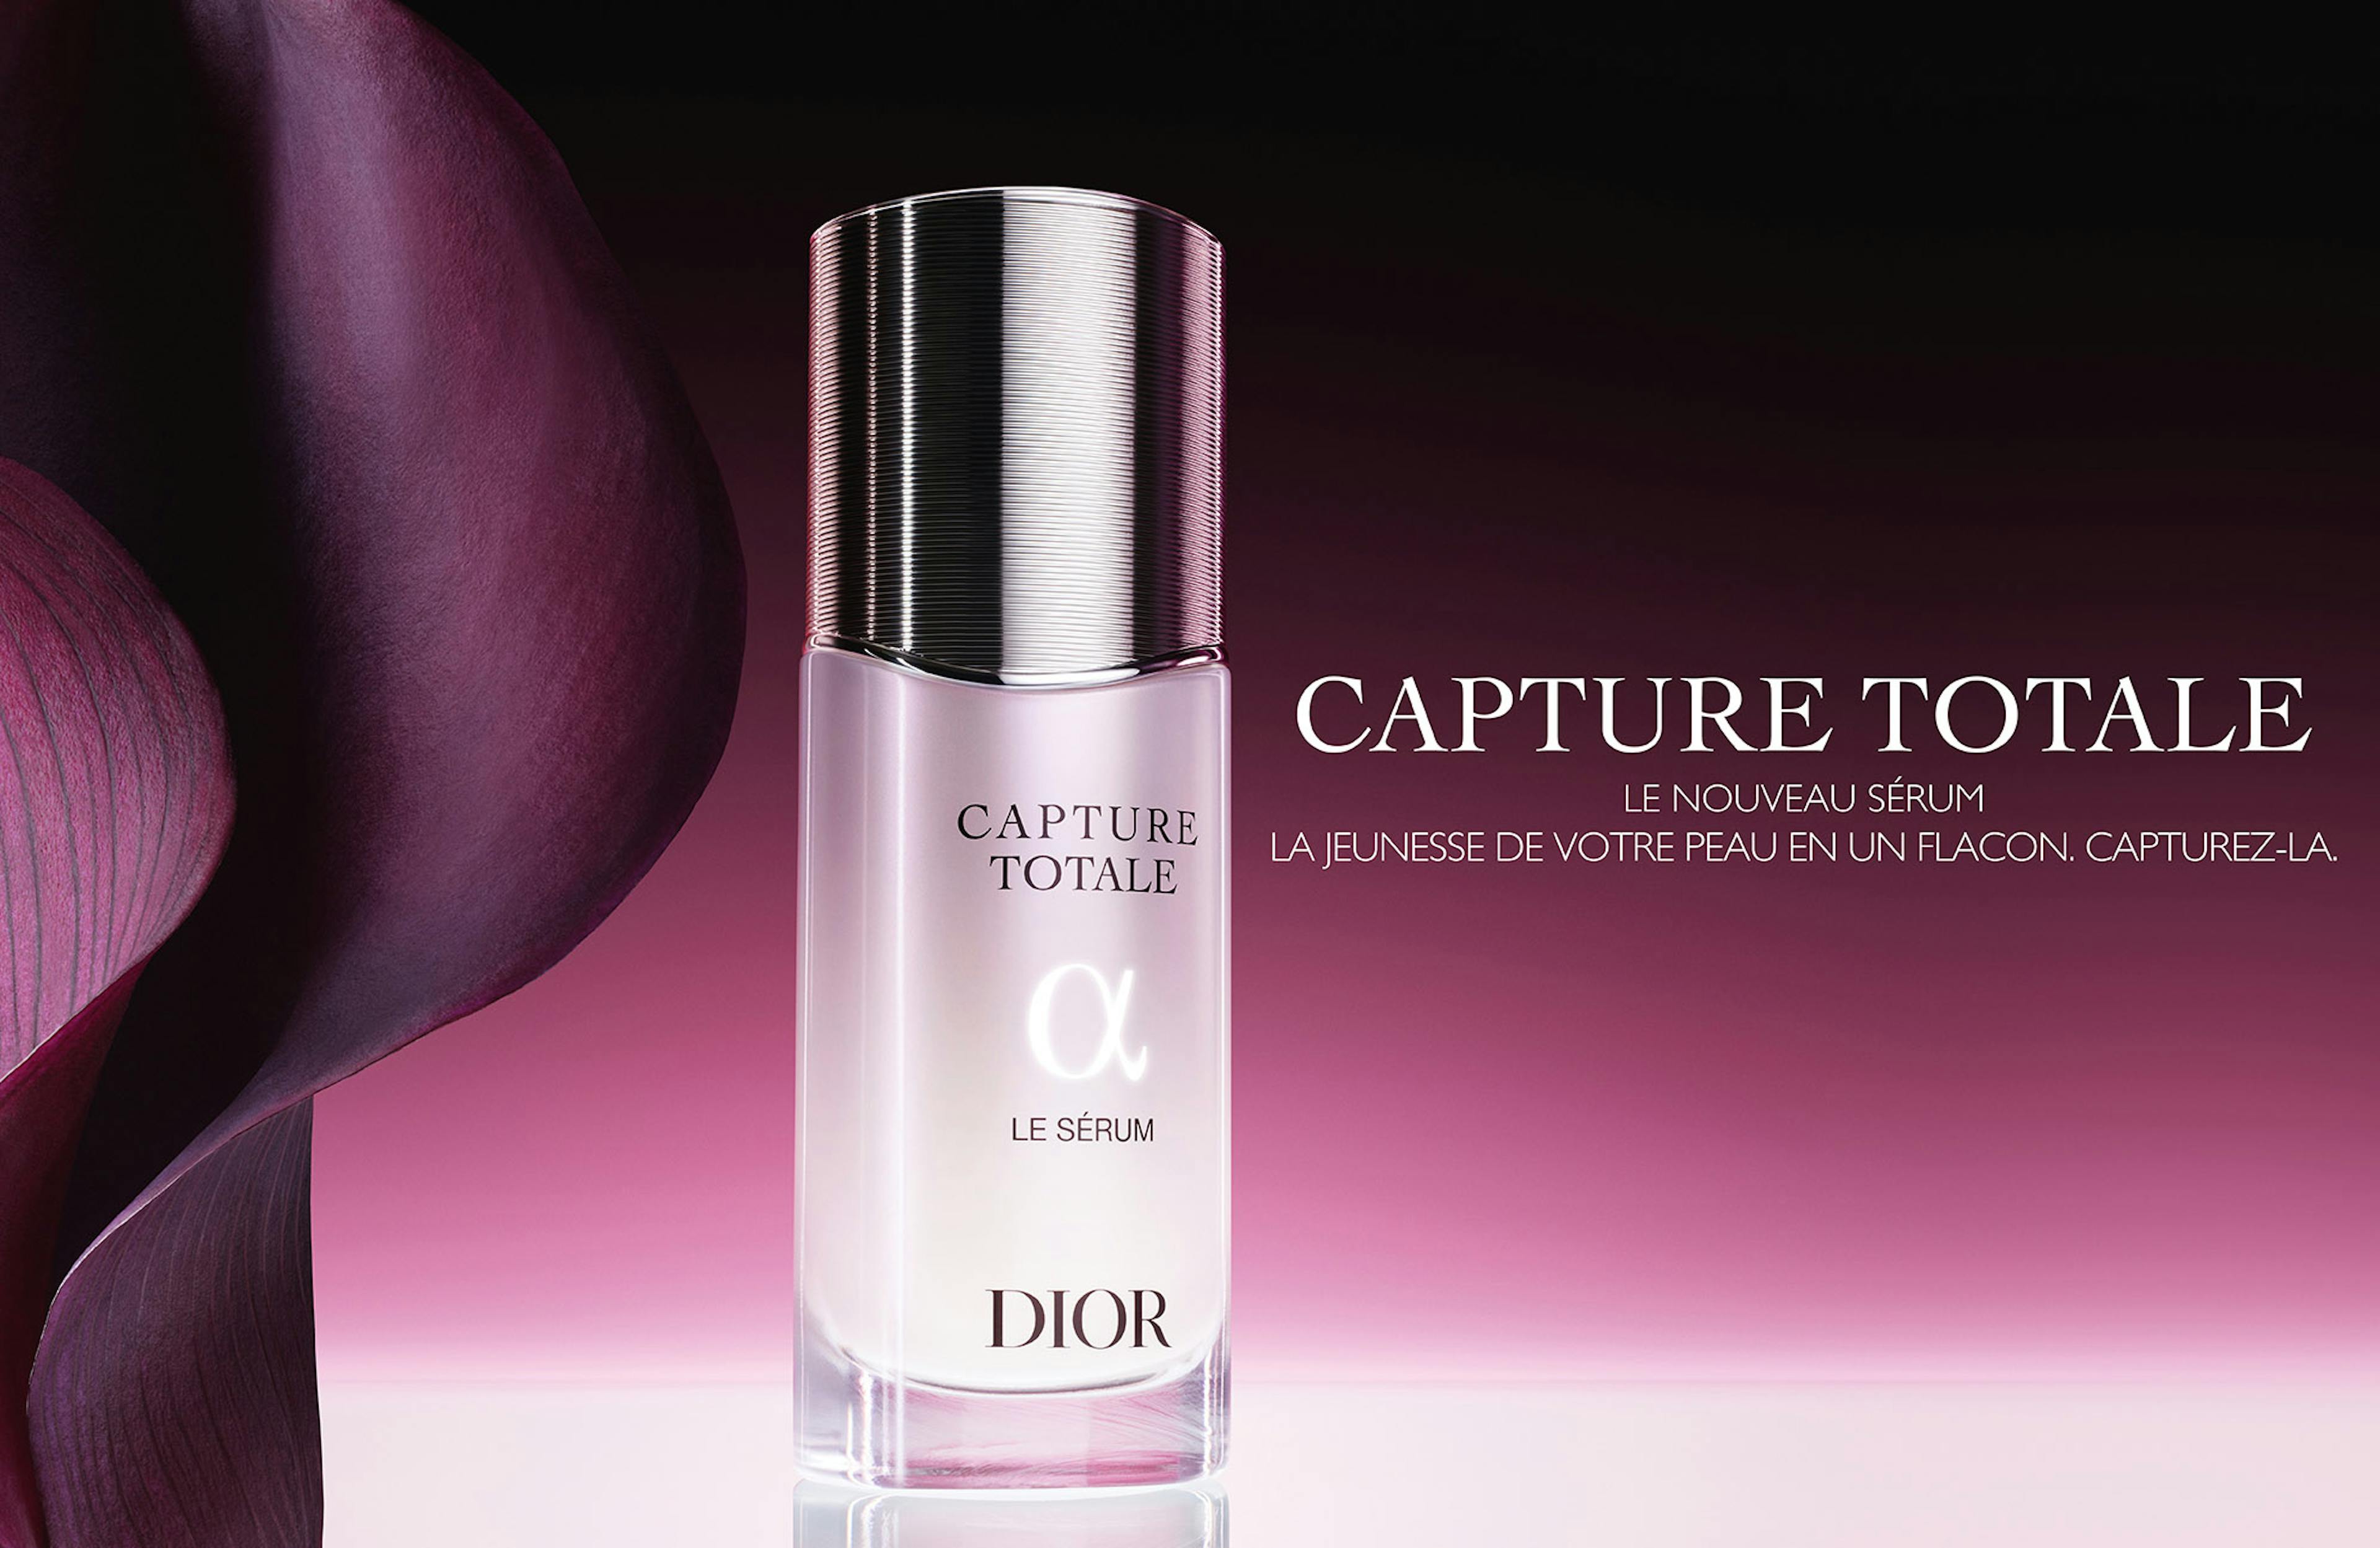 DIOR CAPTURE TOTALE © Parfums Christian Dior